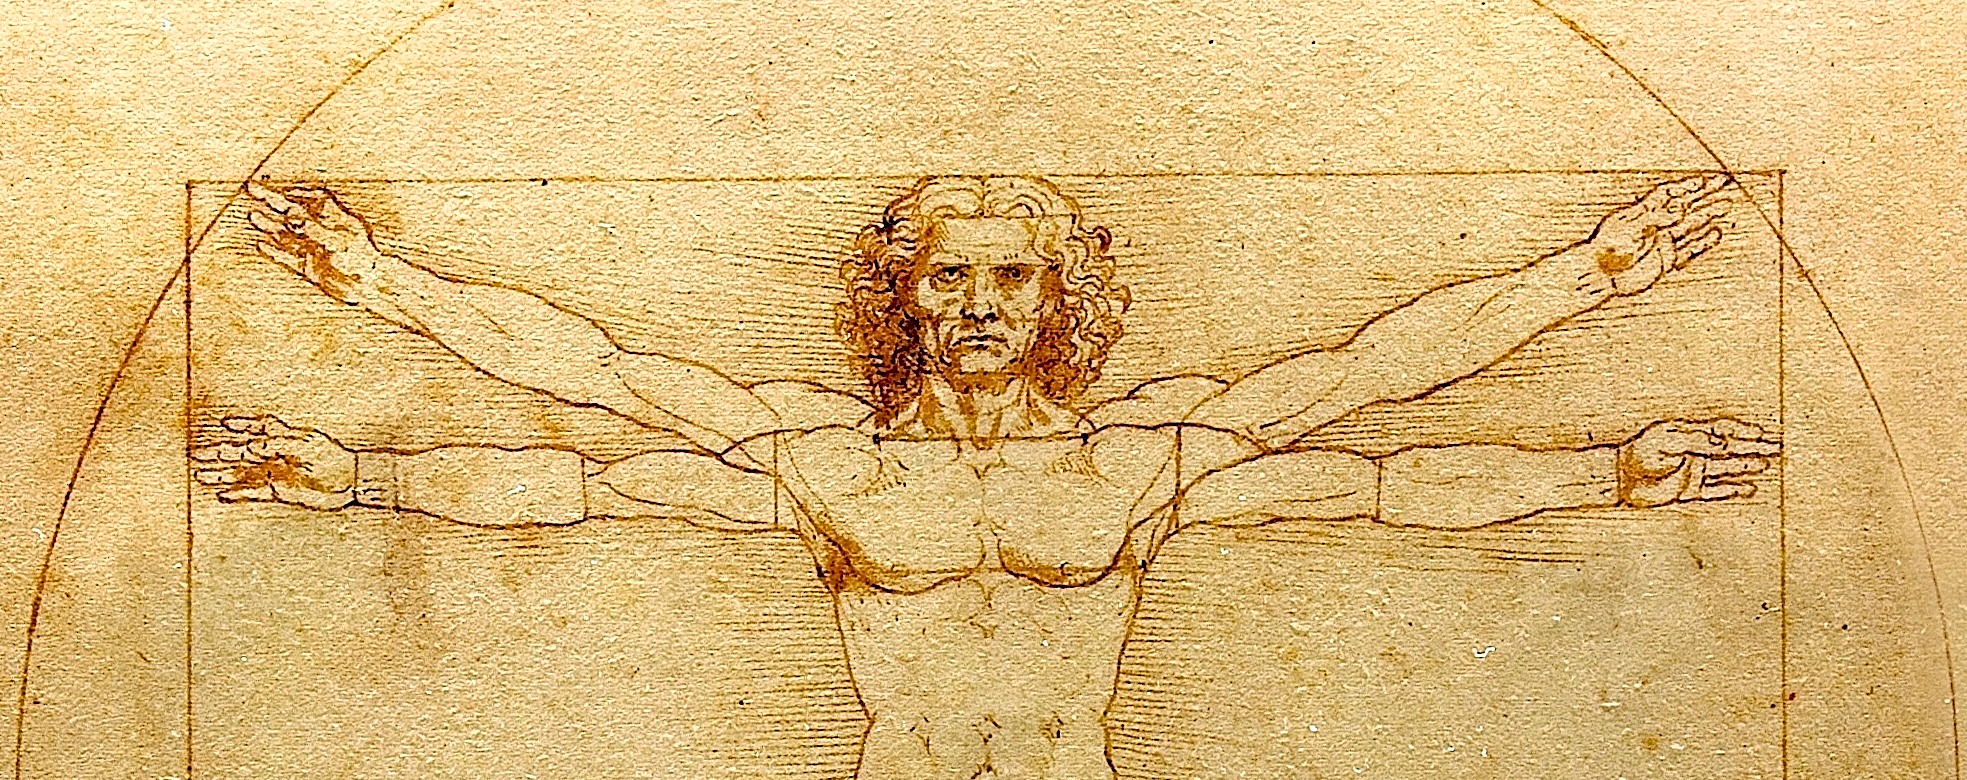 Cropped version of Leonardo da Vinci's Vitruvian Man